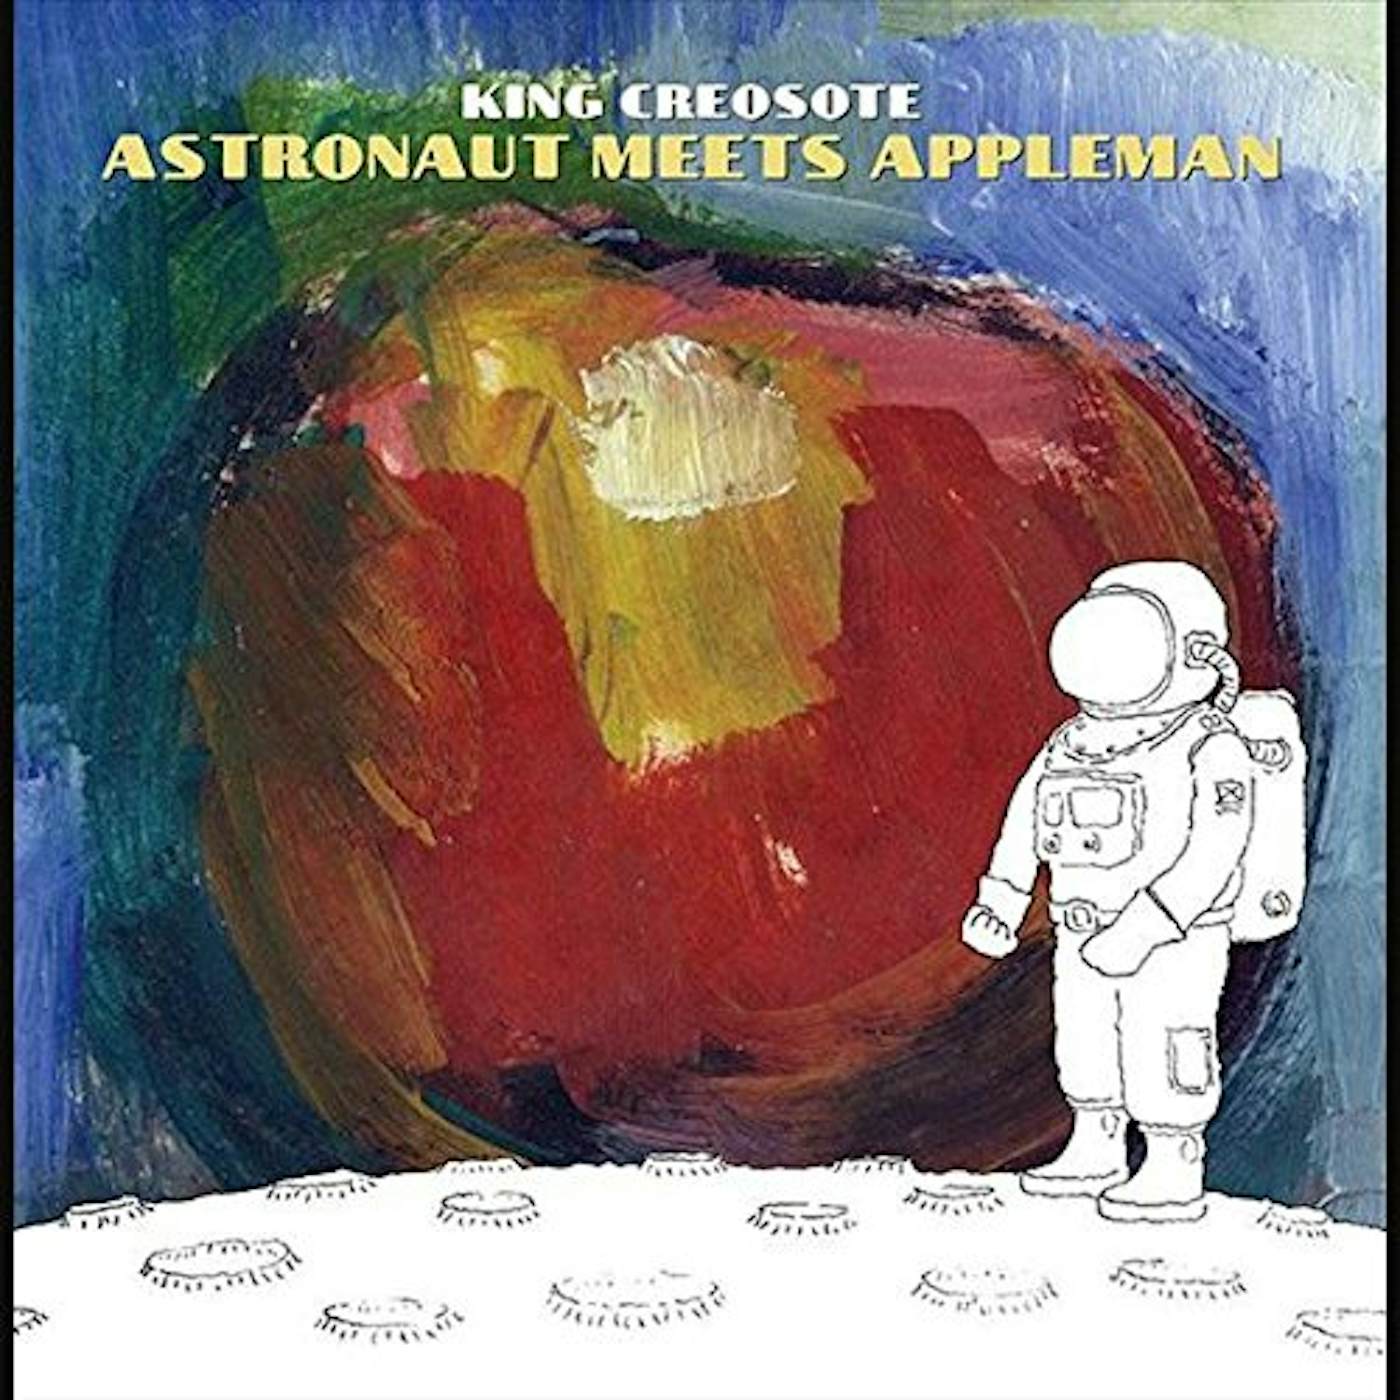 King Creosote ASTRONUAT MEETS APPLEMAN: SPECIAL EDITION Vinyl Record